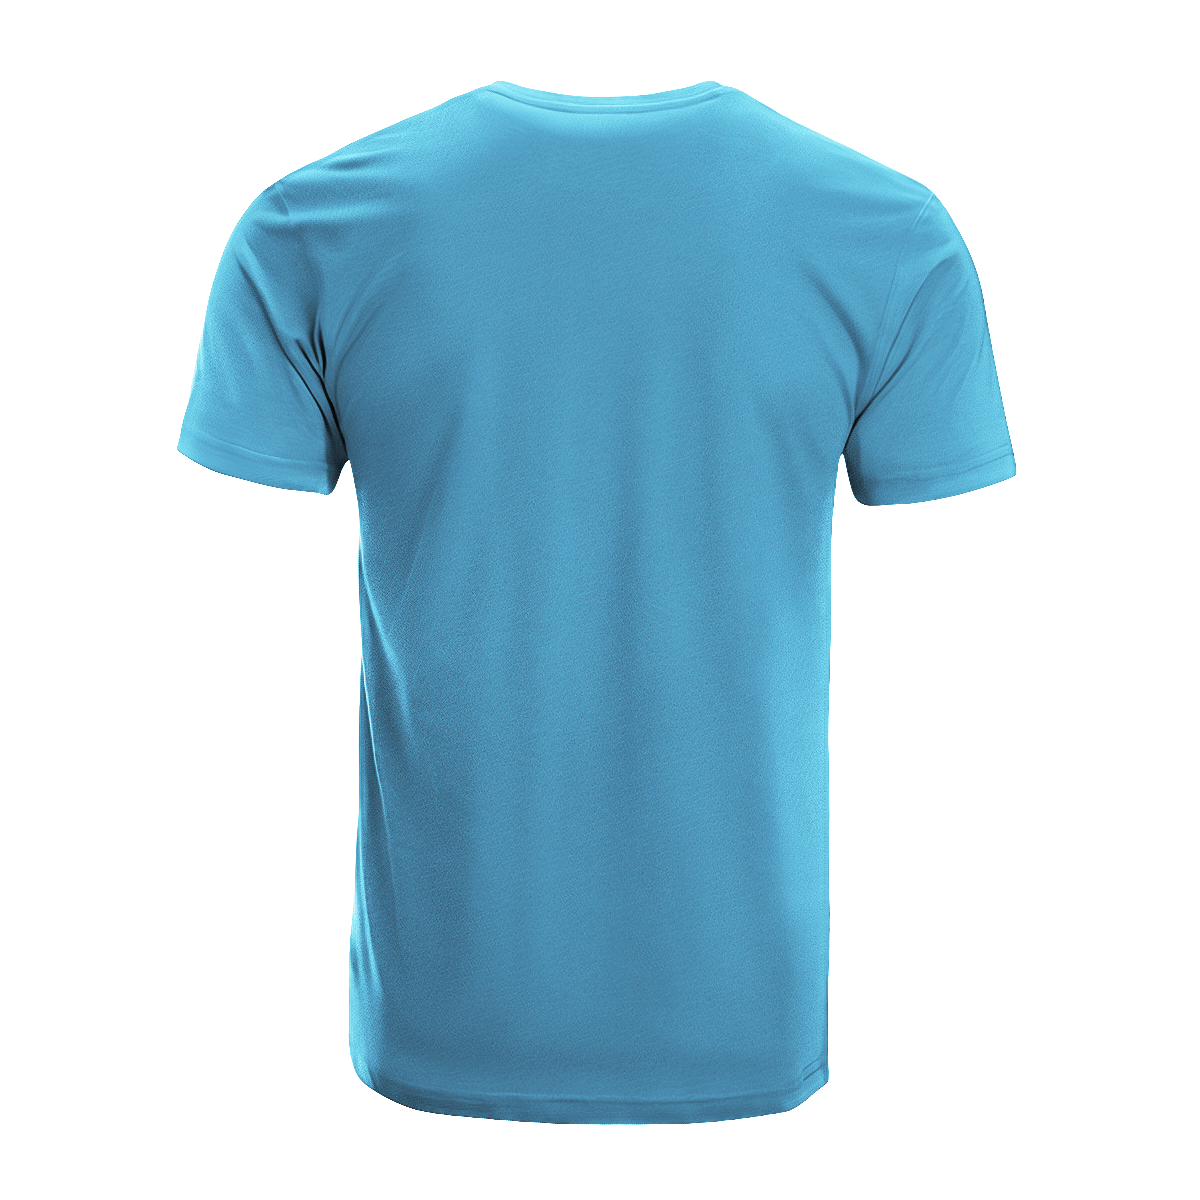 Pentland Tartan Crest T-shirt - I'm not yelling style